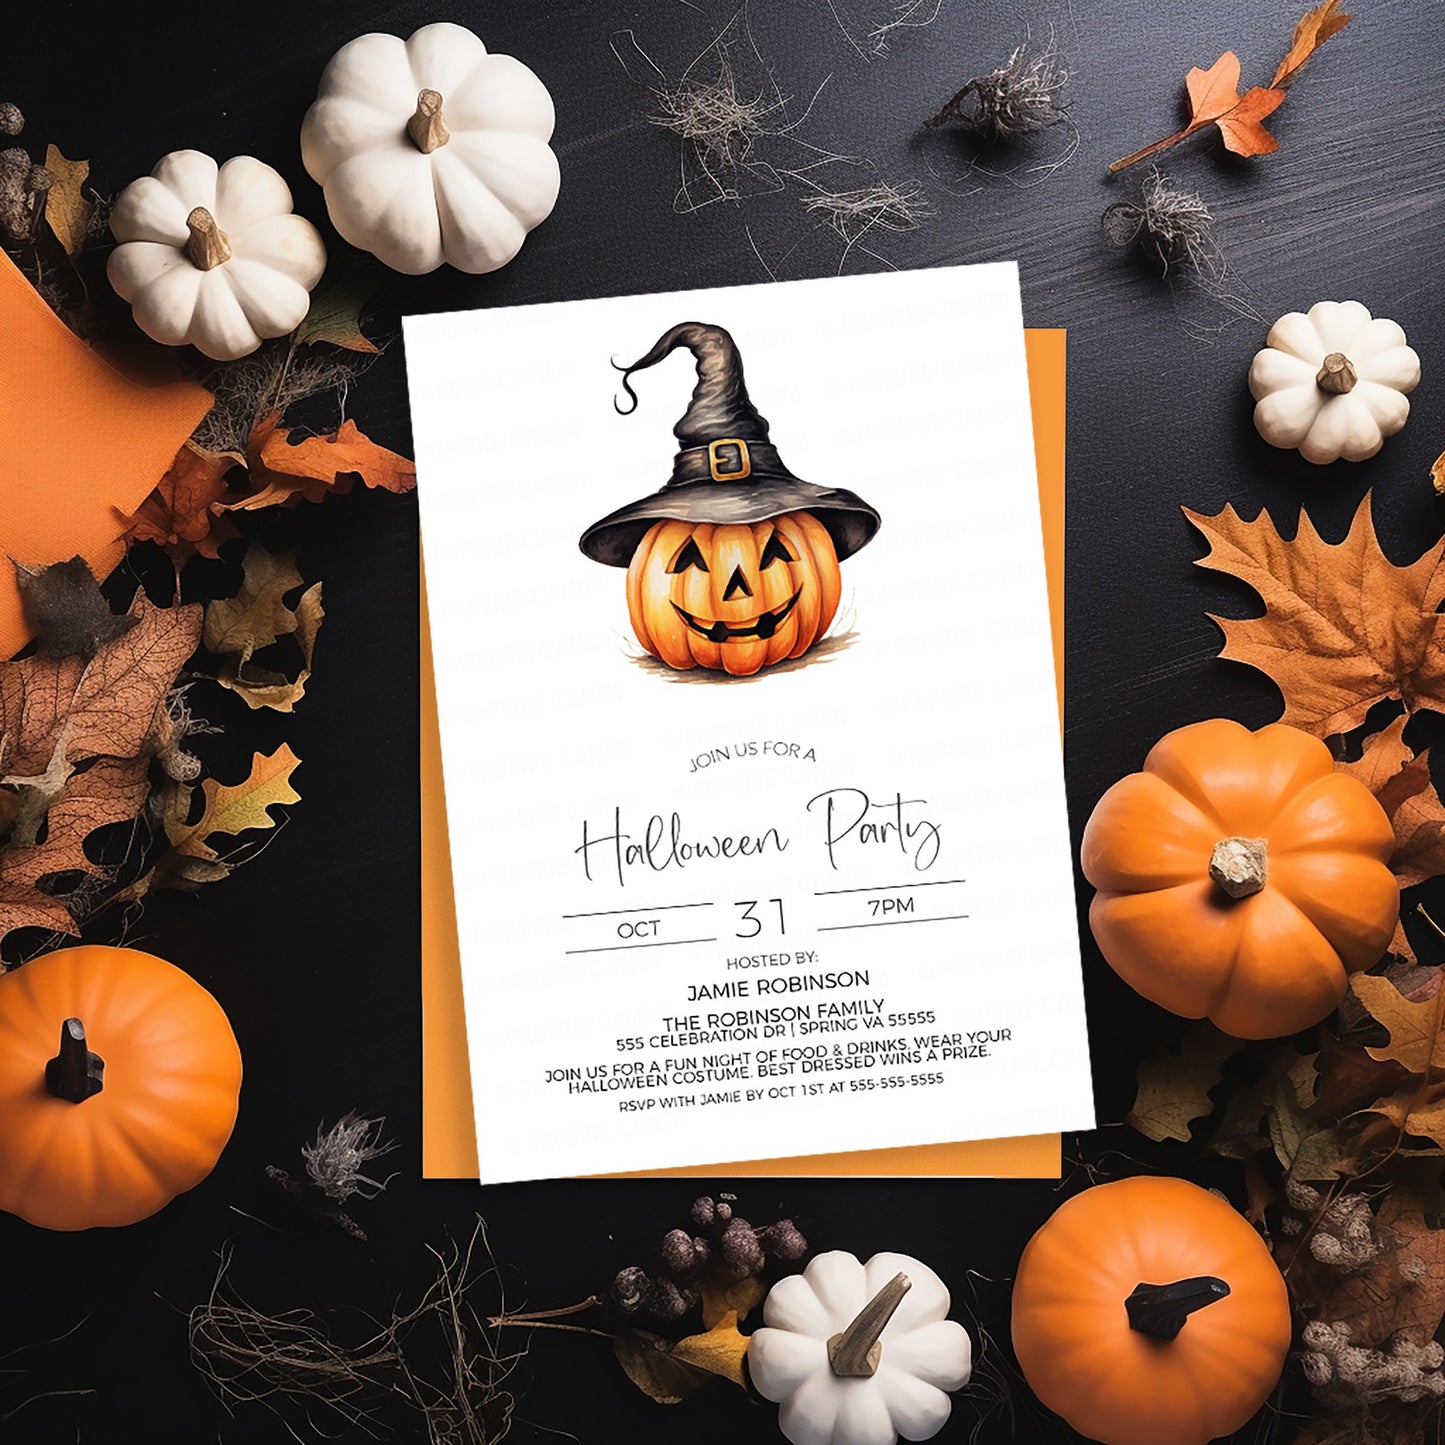 Halloween Party Invitation, Costume Party Invite, Lunch Brunch Dinner Breakfast, Employee Staff Volunteer Appreciation, Editable Printable